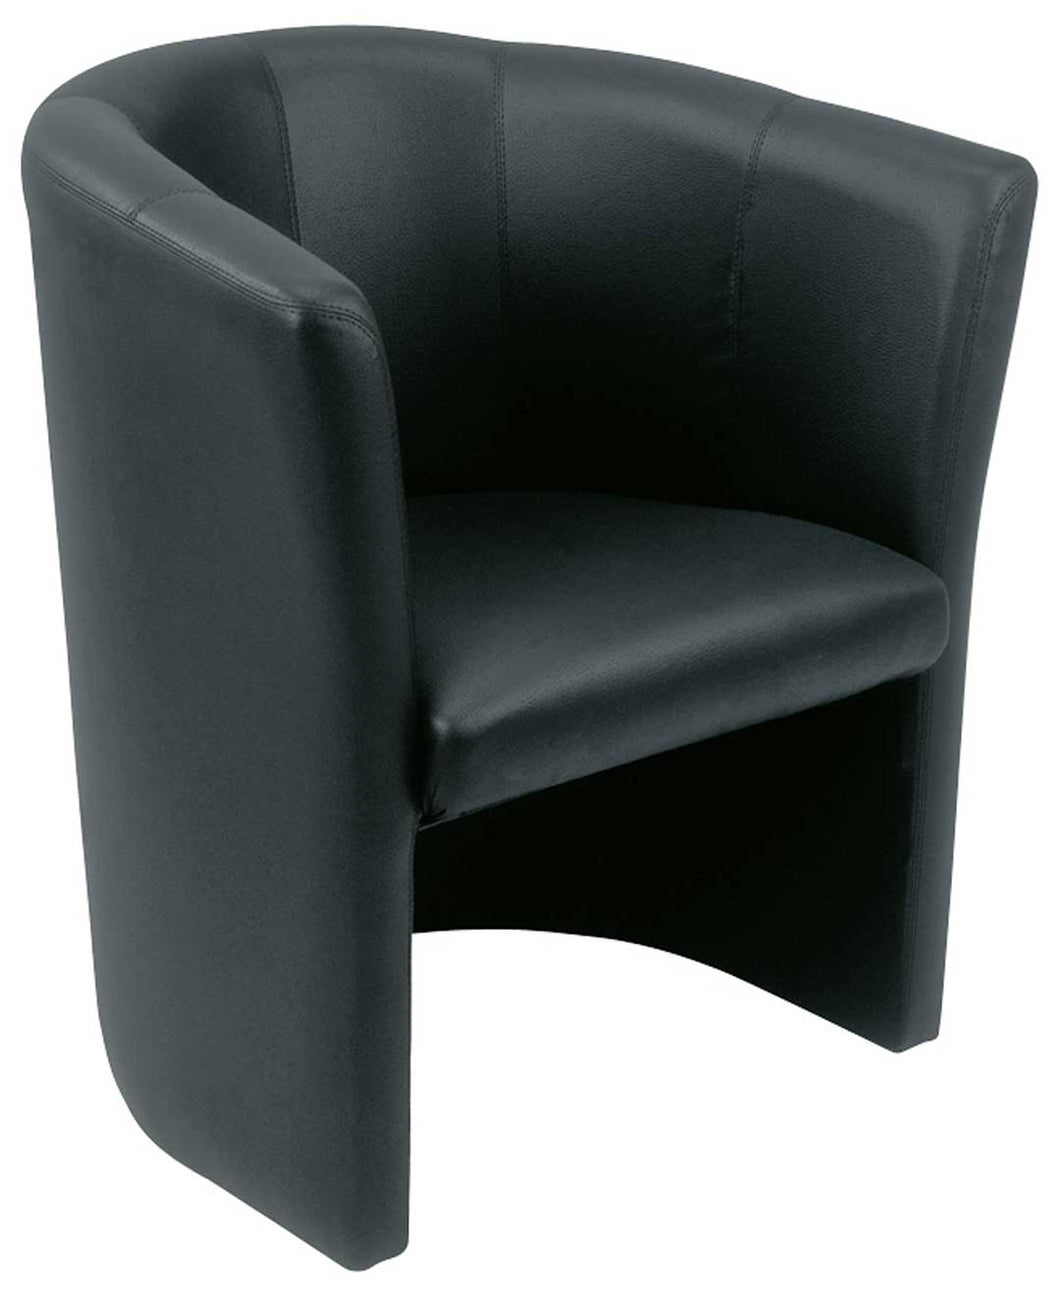 Classic Tub Chair - Black